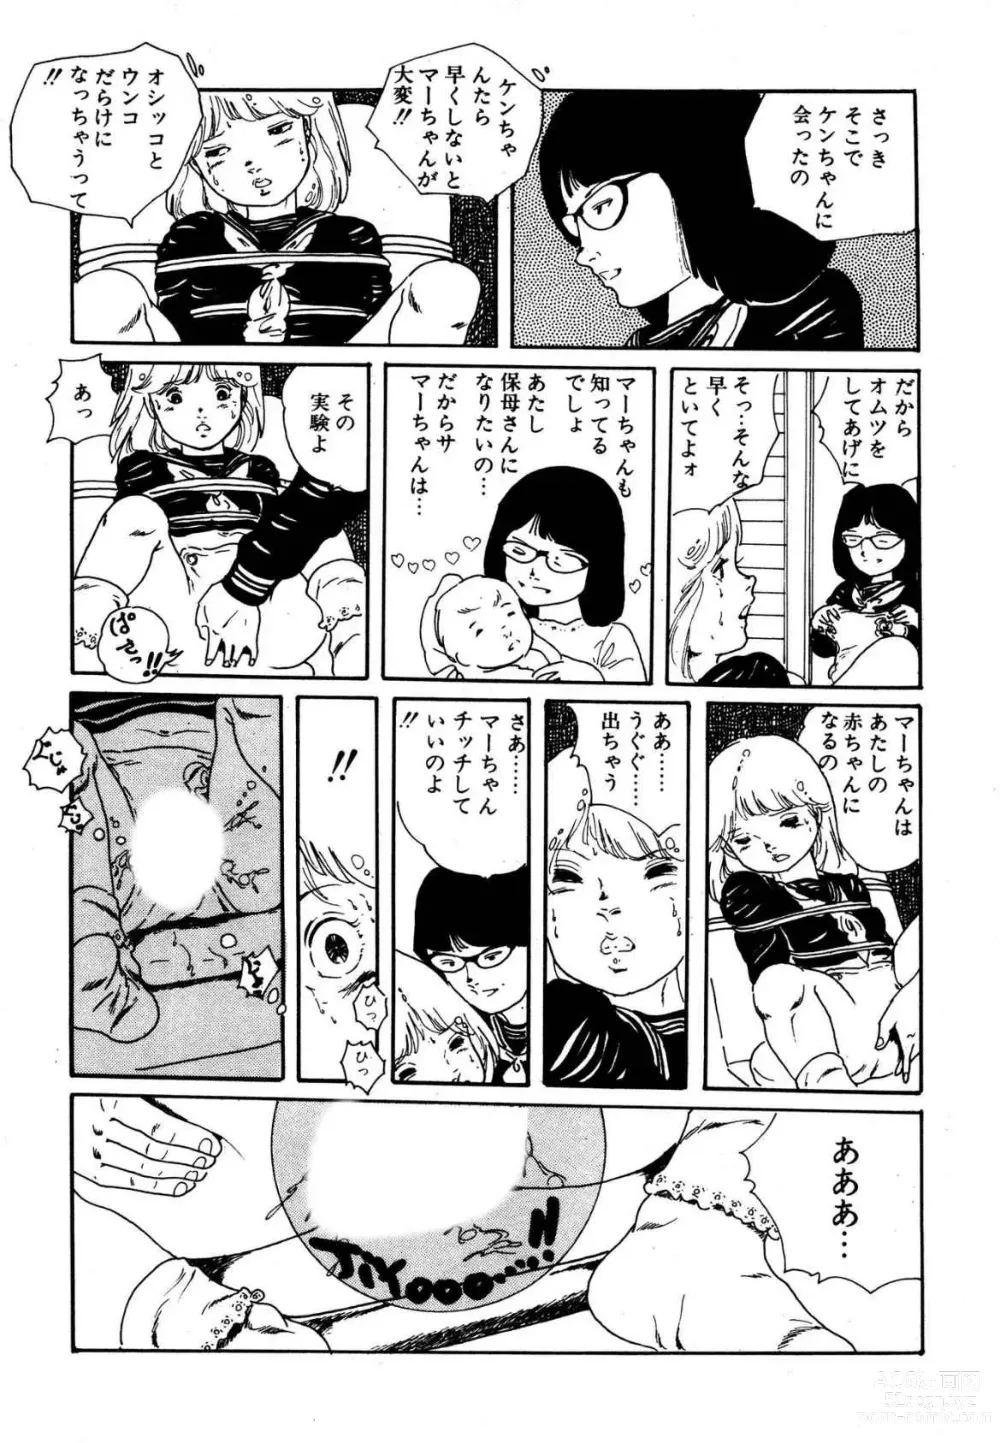 Page 16 of manga Dreaming fairy